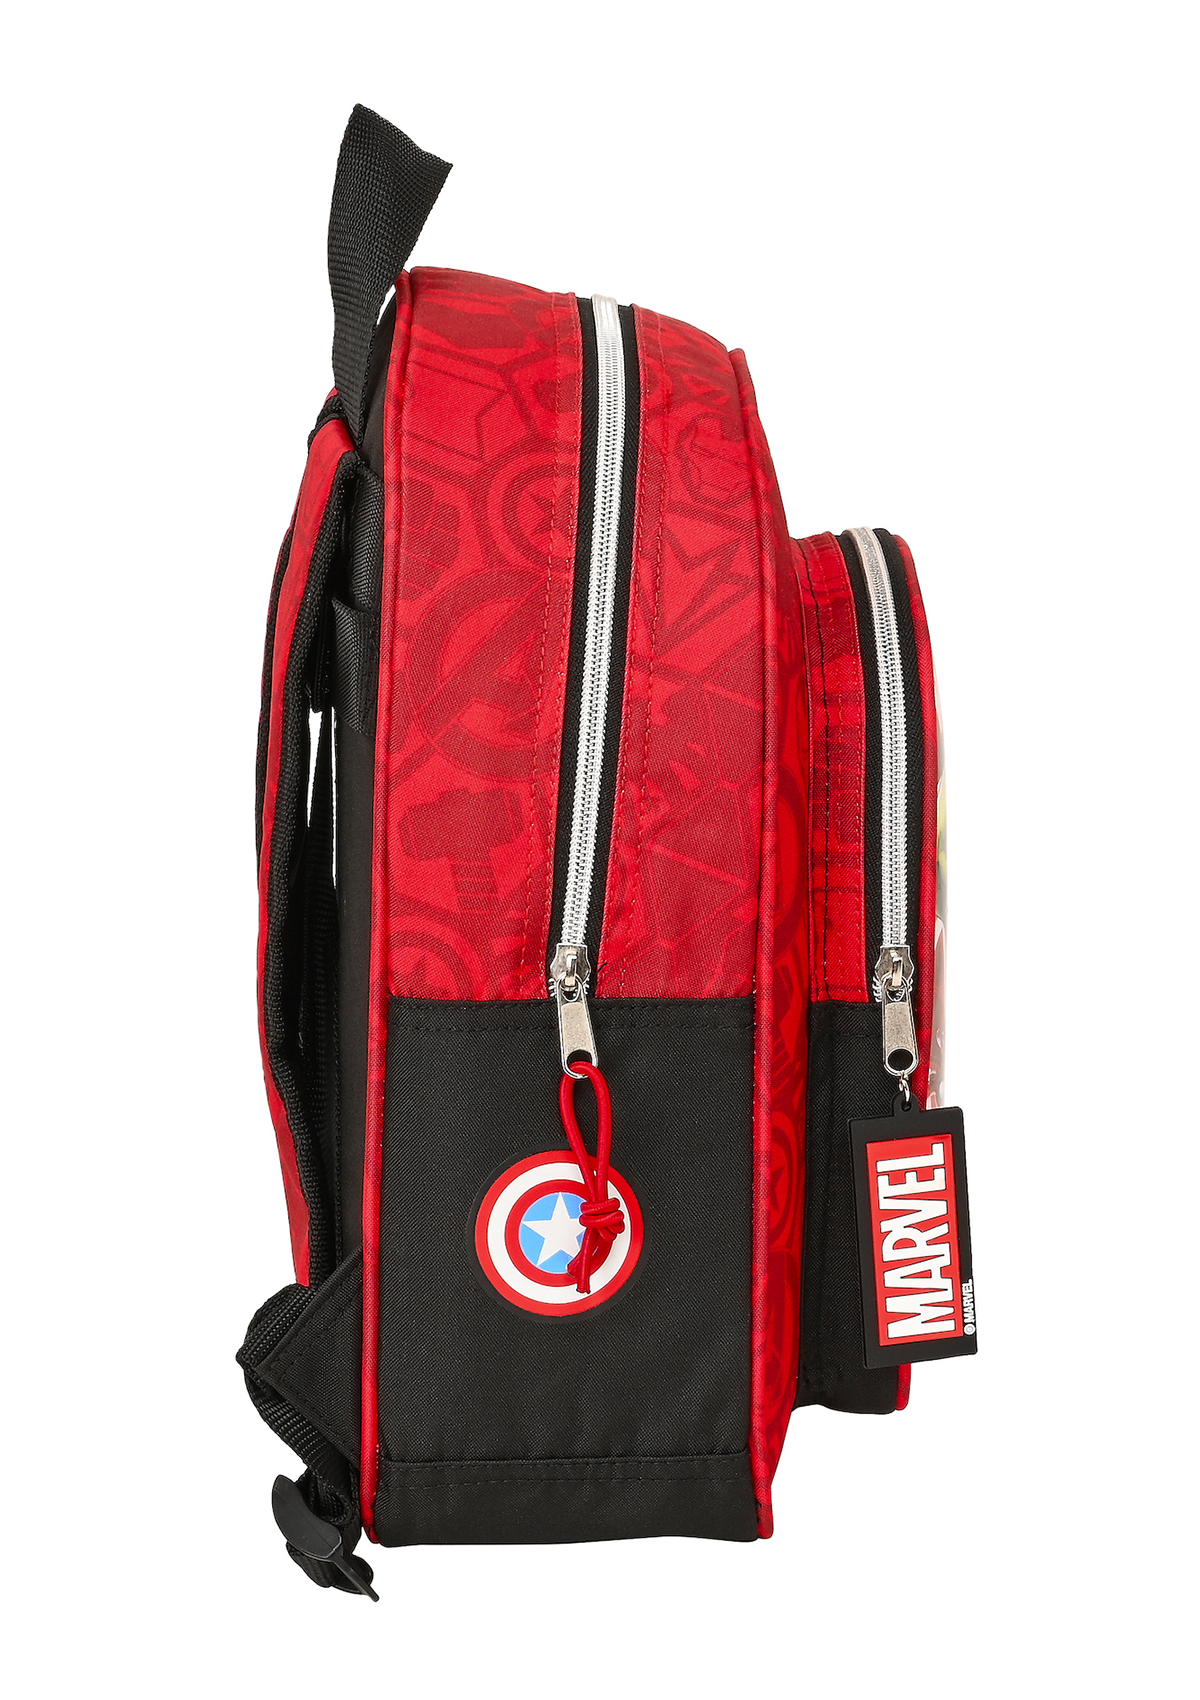 Avengers Infinity Small Backpack